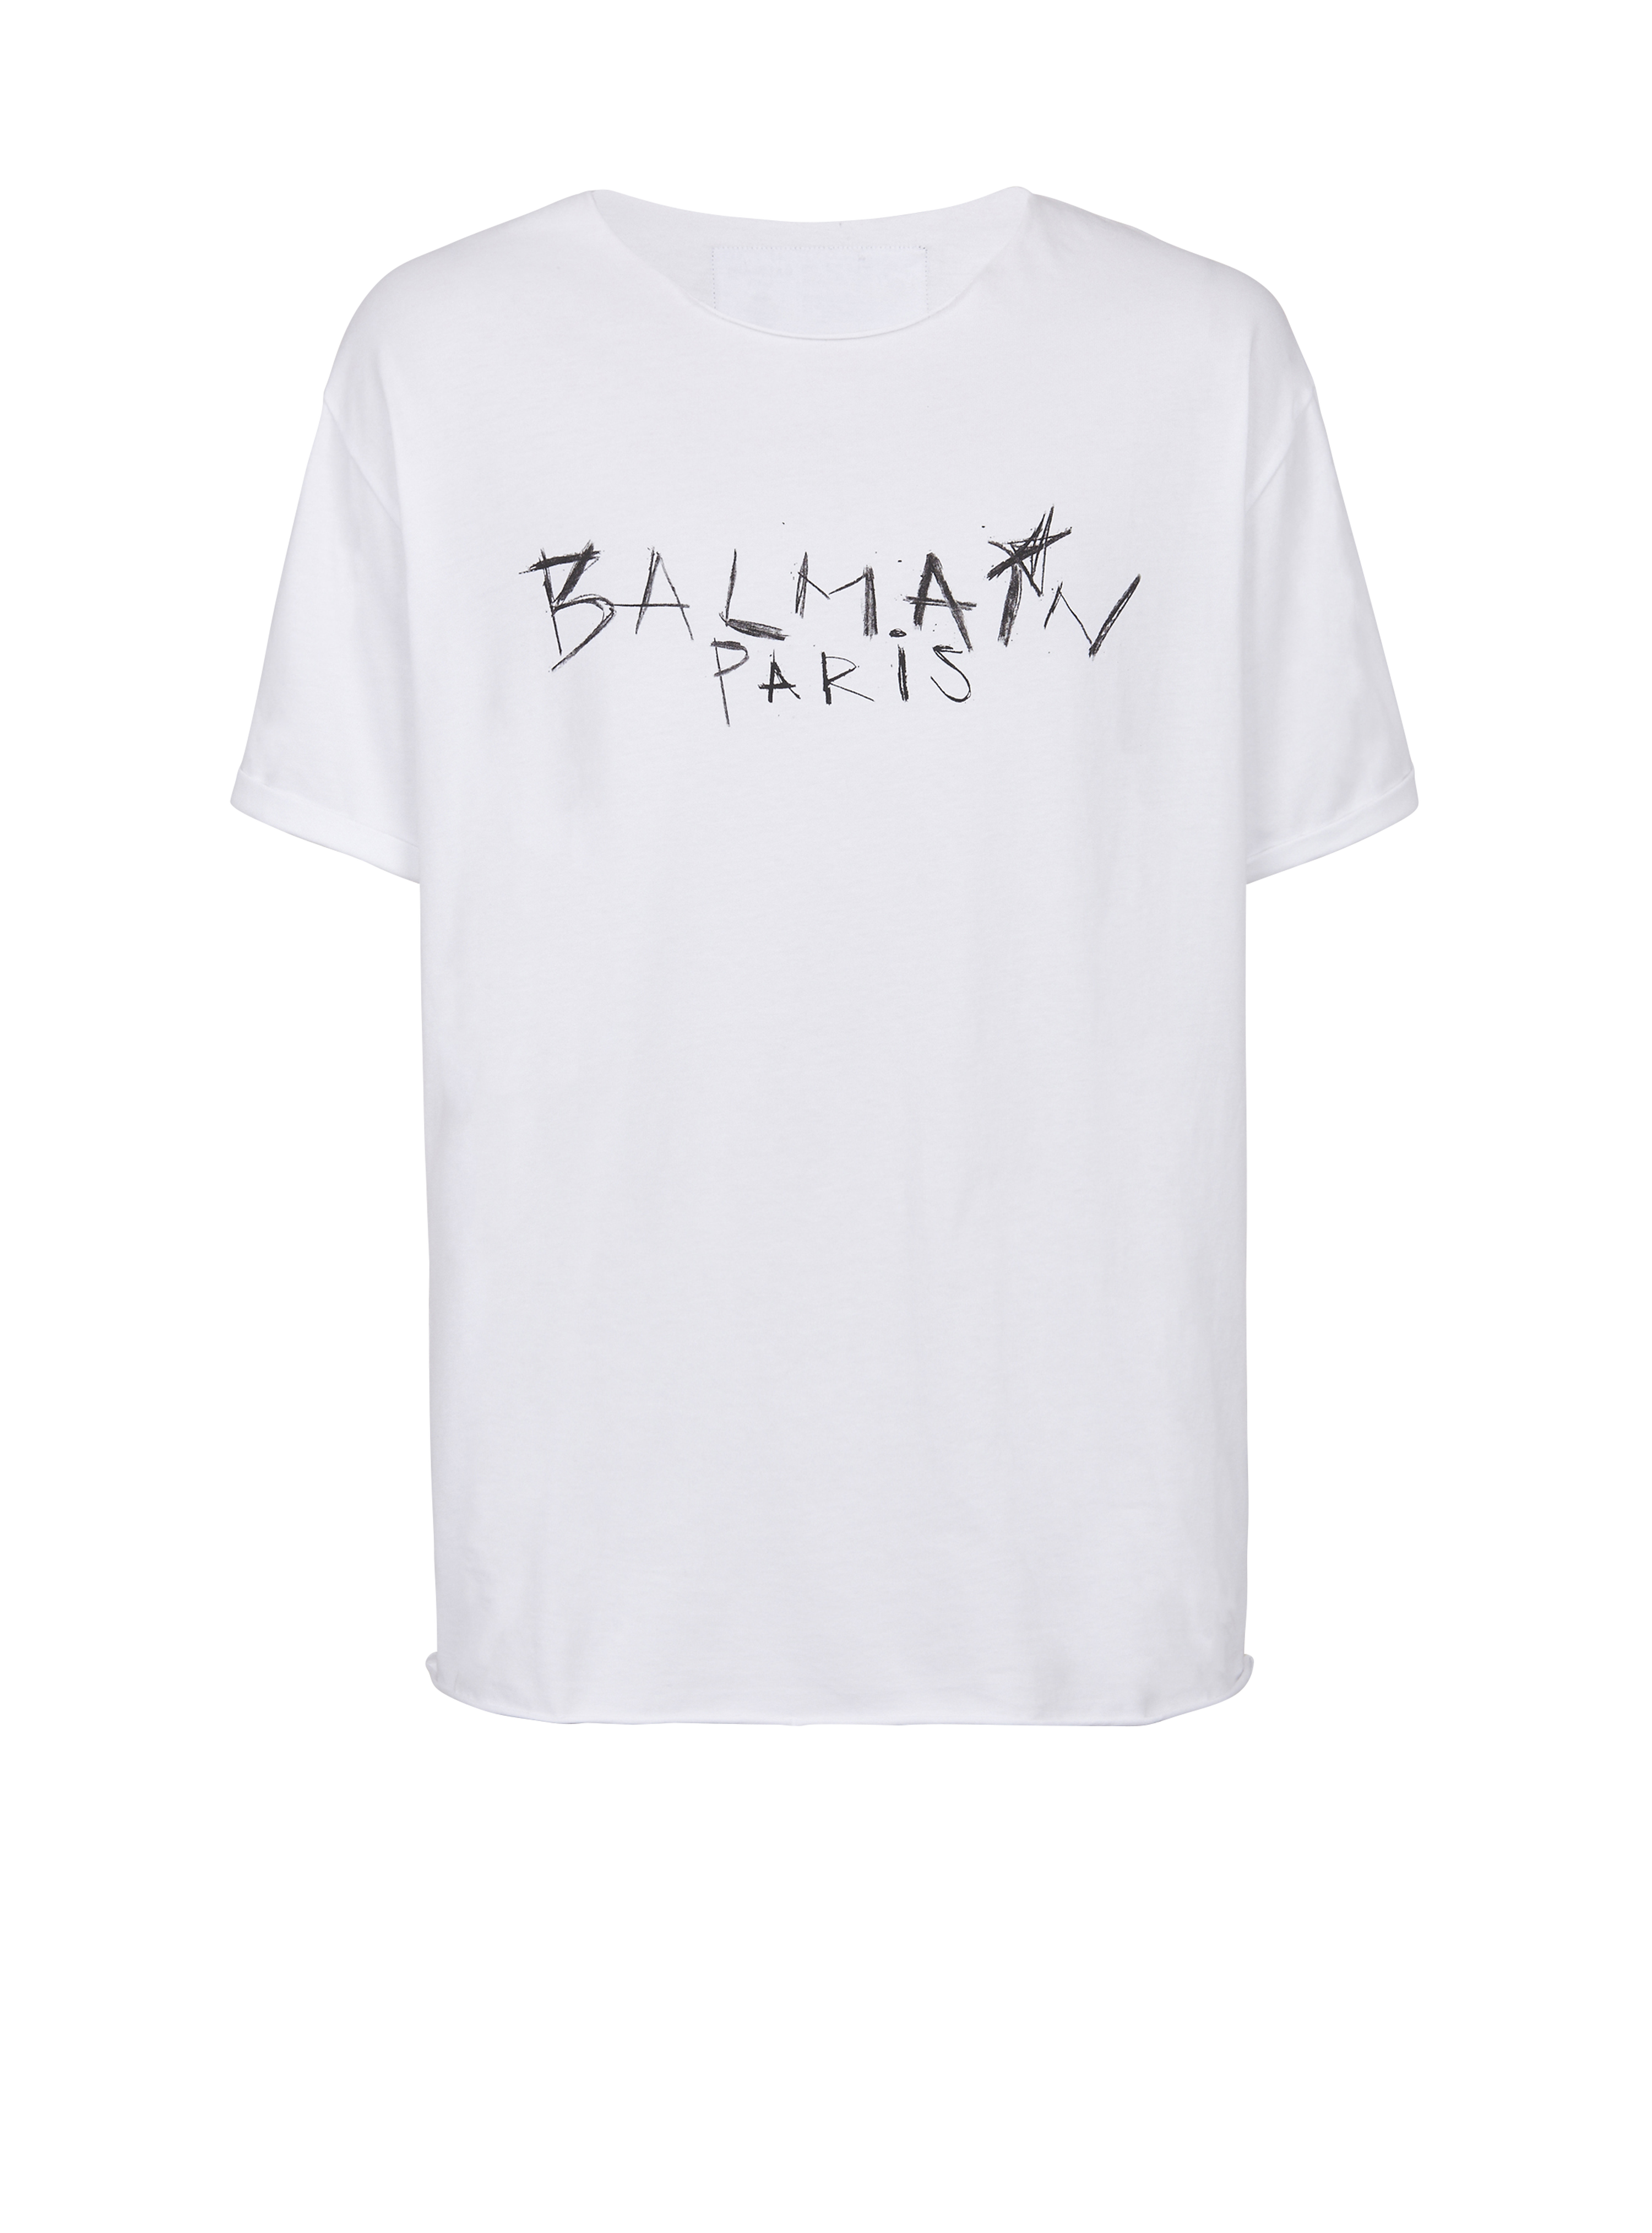 T-shirt en coton imprimé logo graffiti Balmain Paris, blanc